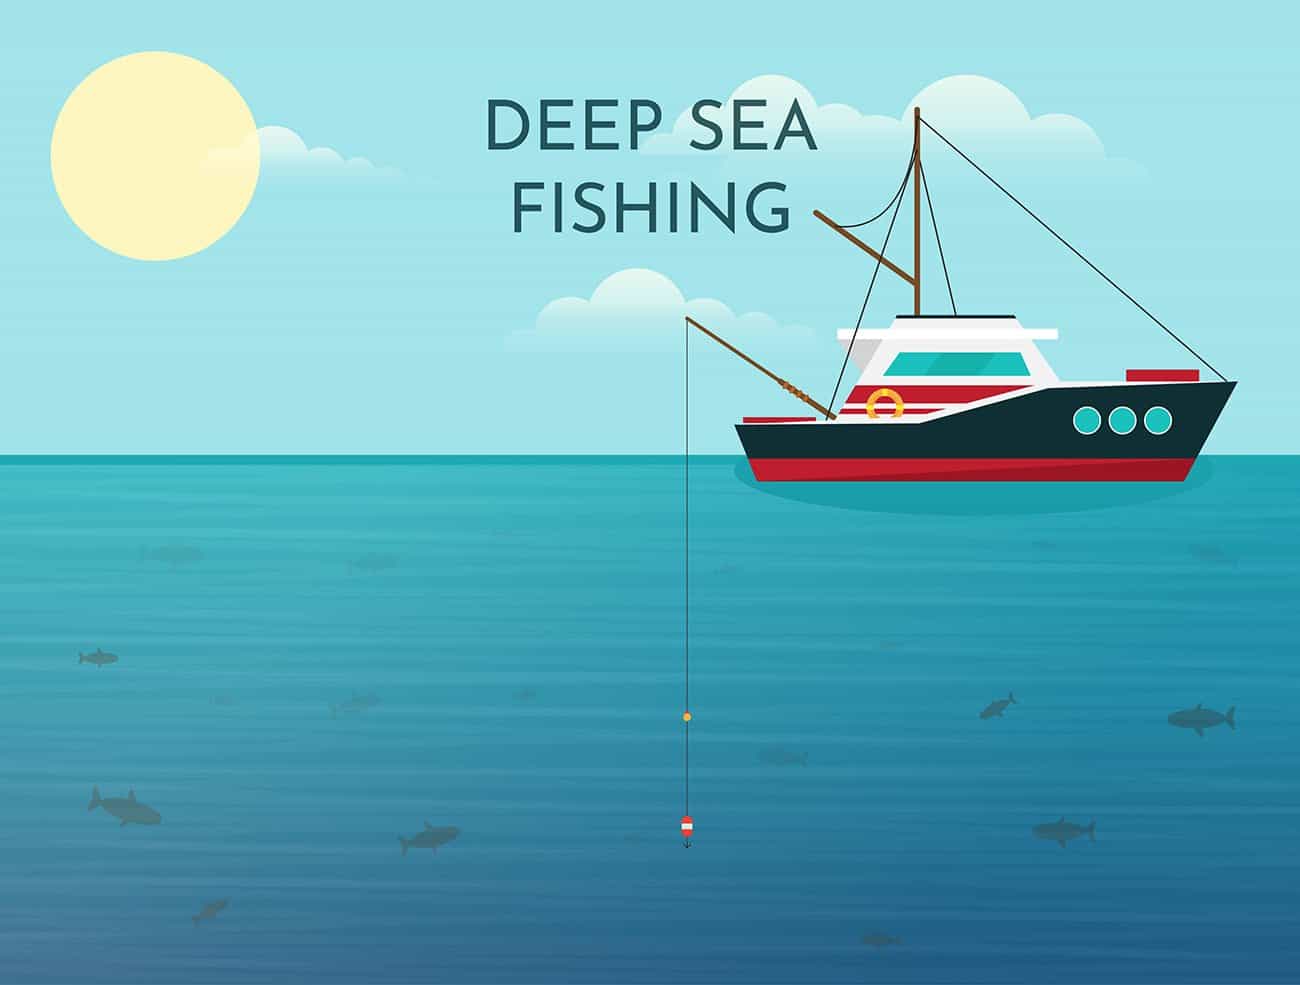 What is Aruba Deep Sea Fishing